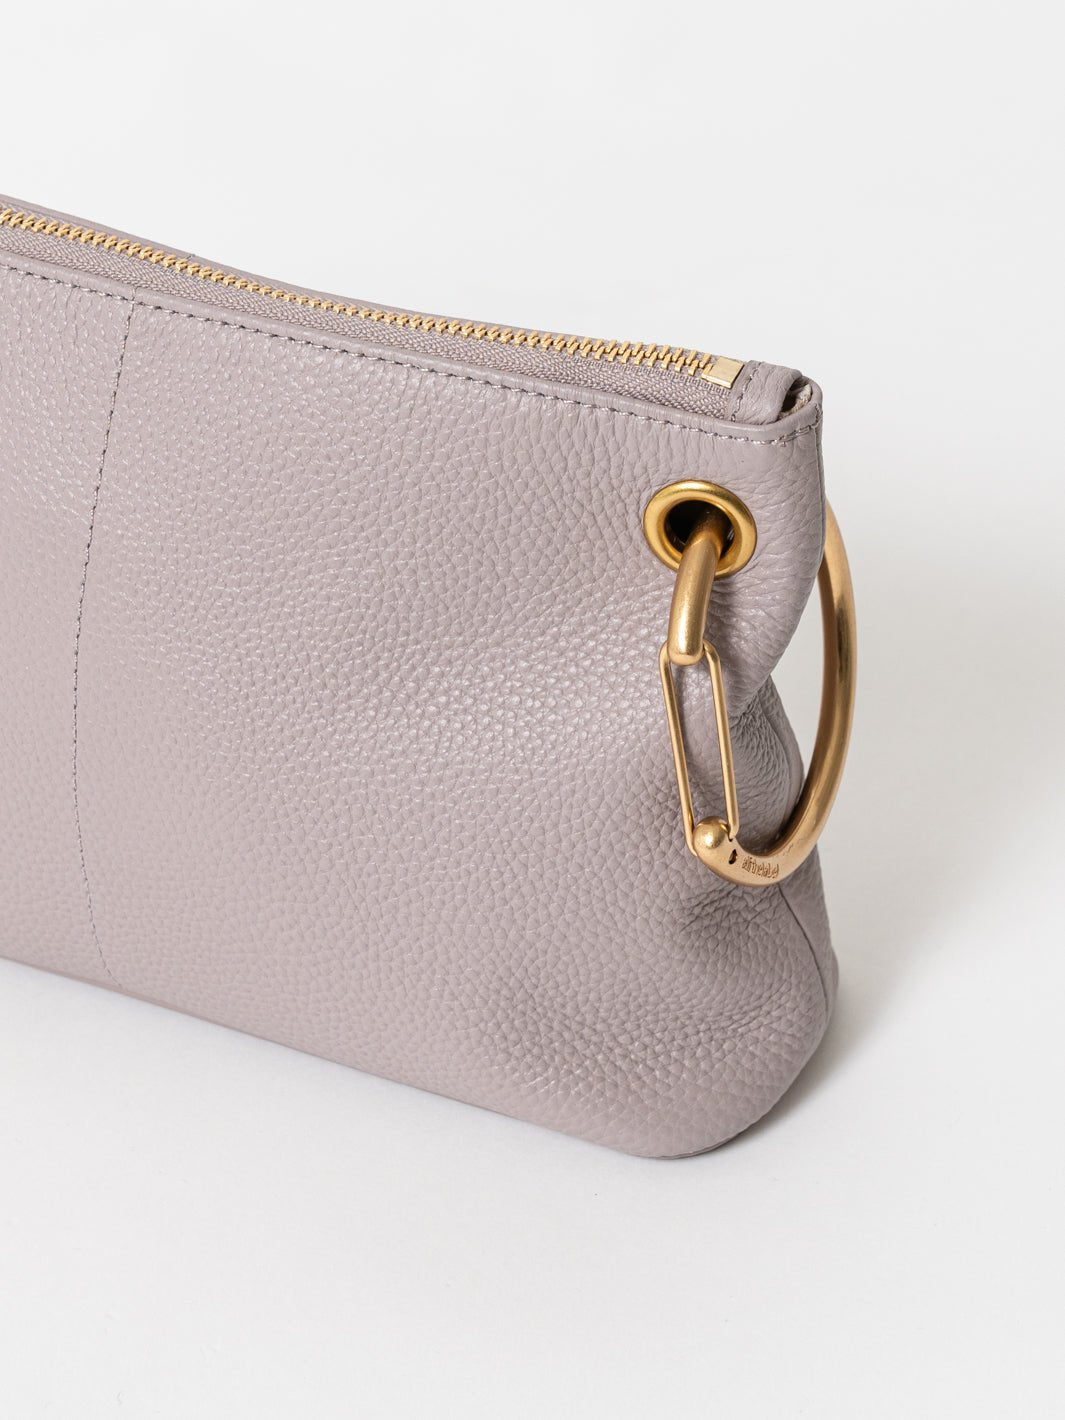 BON MAXIE Leather Phone Wallet - Black - leather pouch, women's wallet